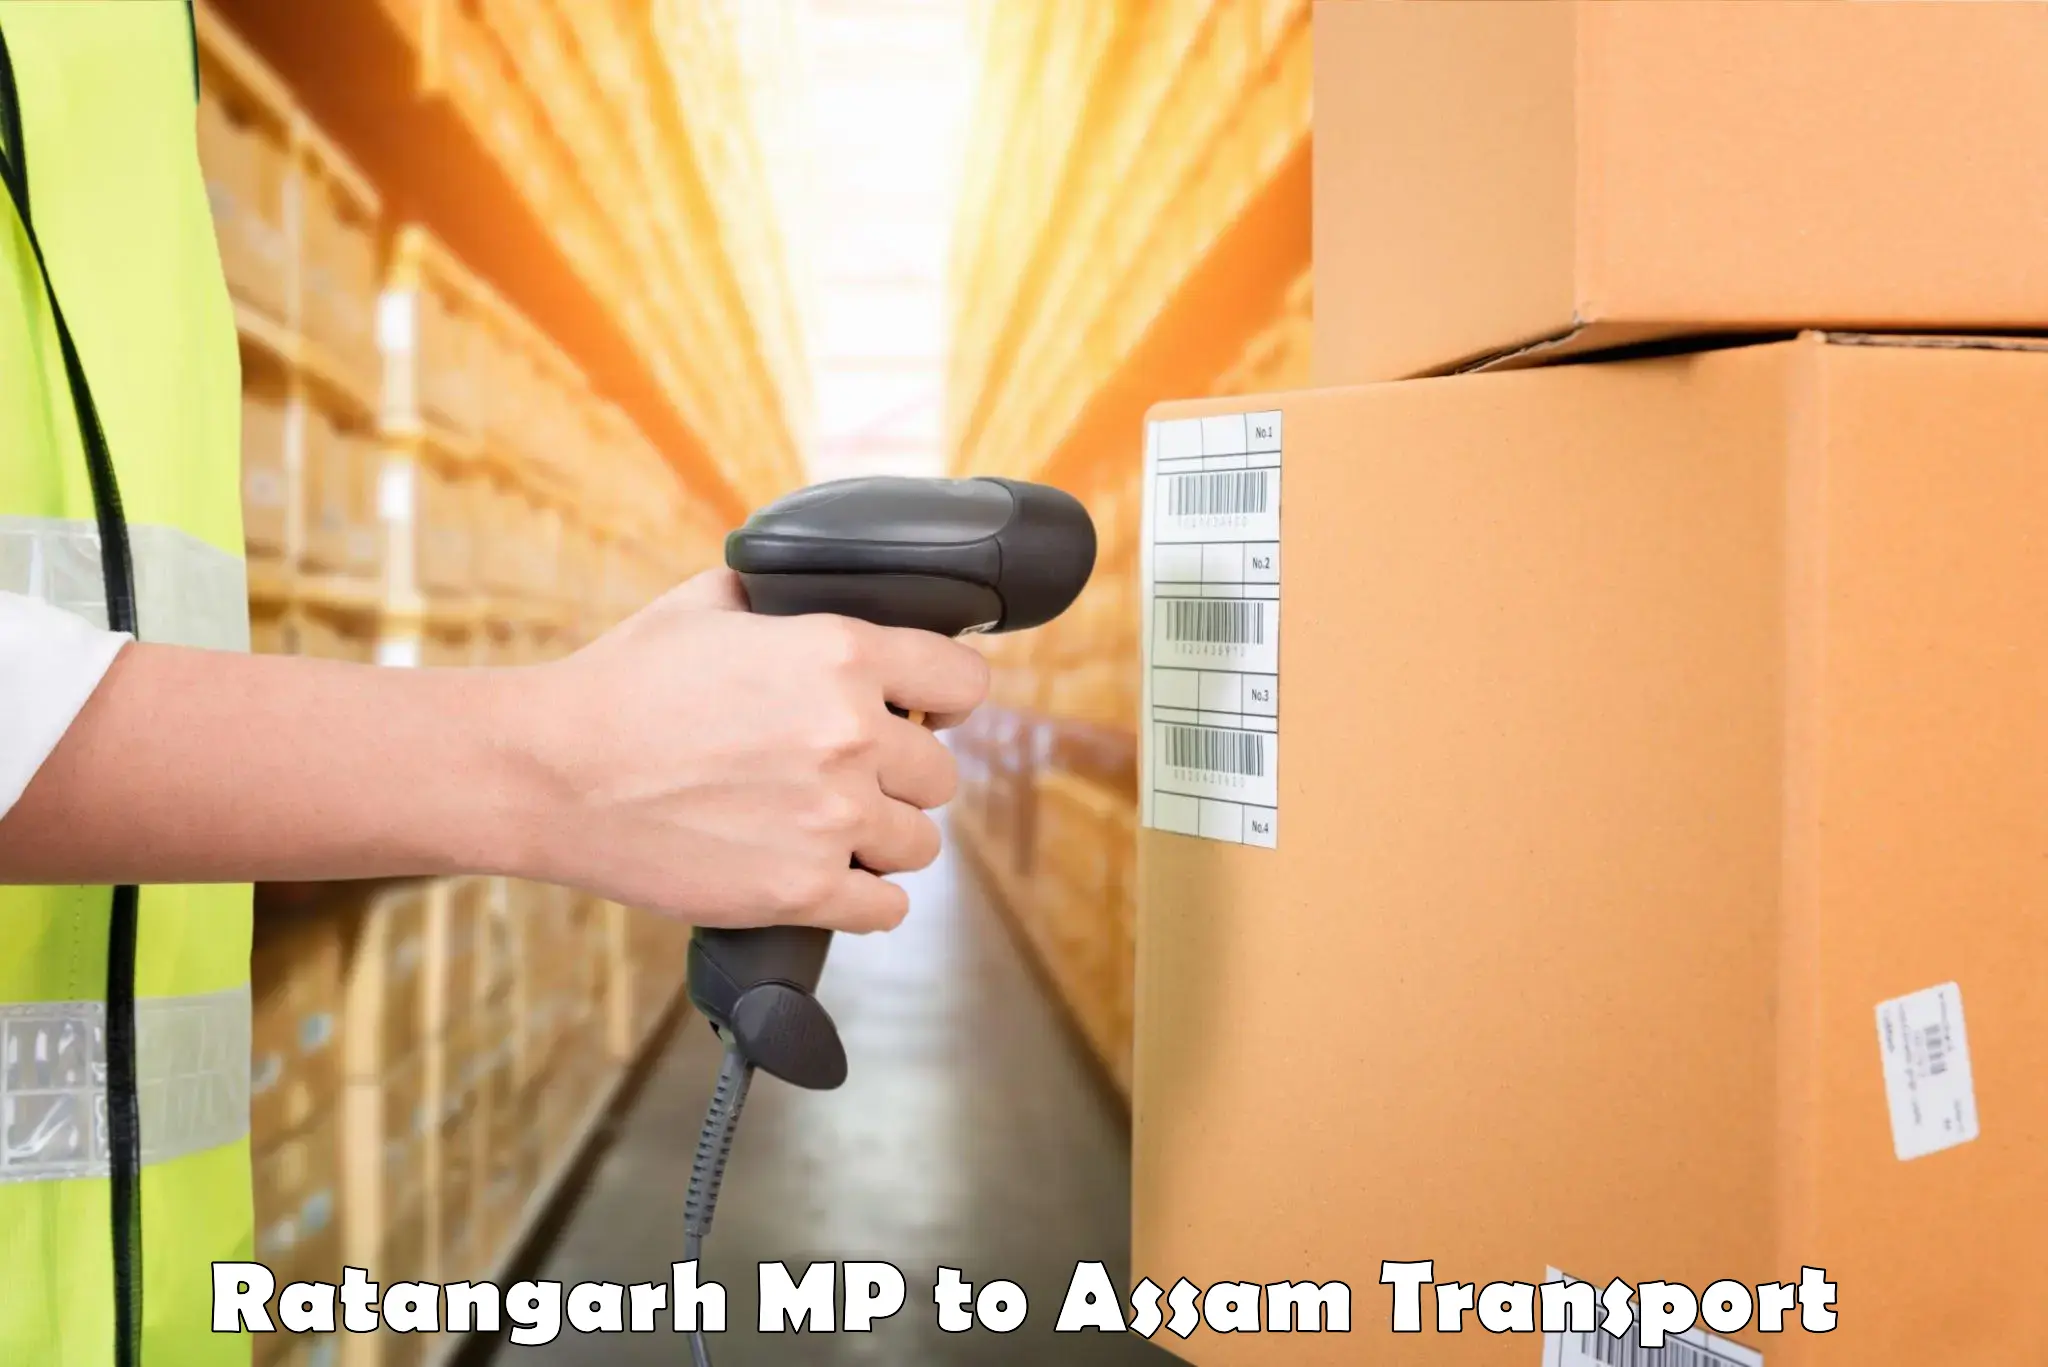 Delivery service Ratangarh MP to Goalpara